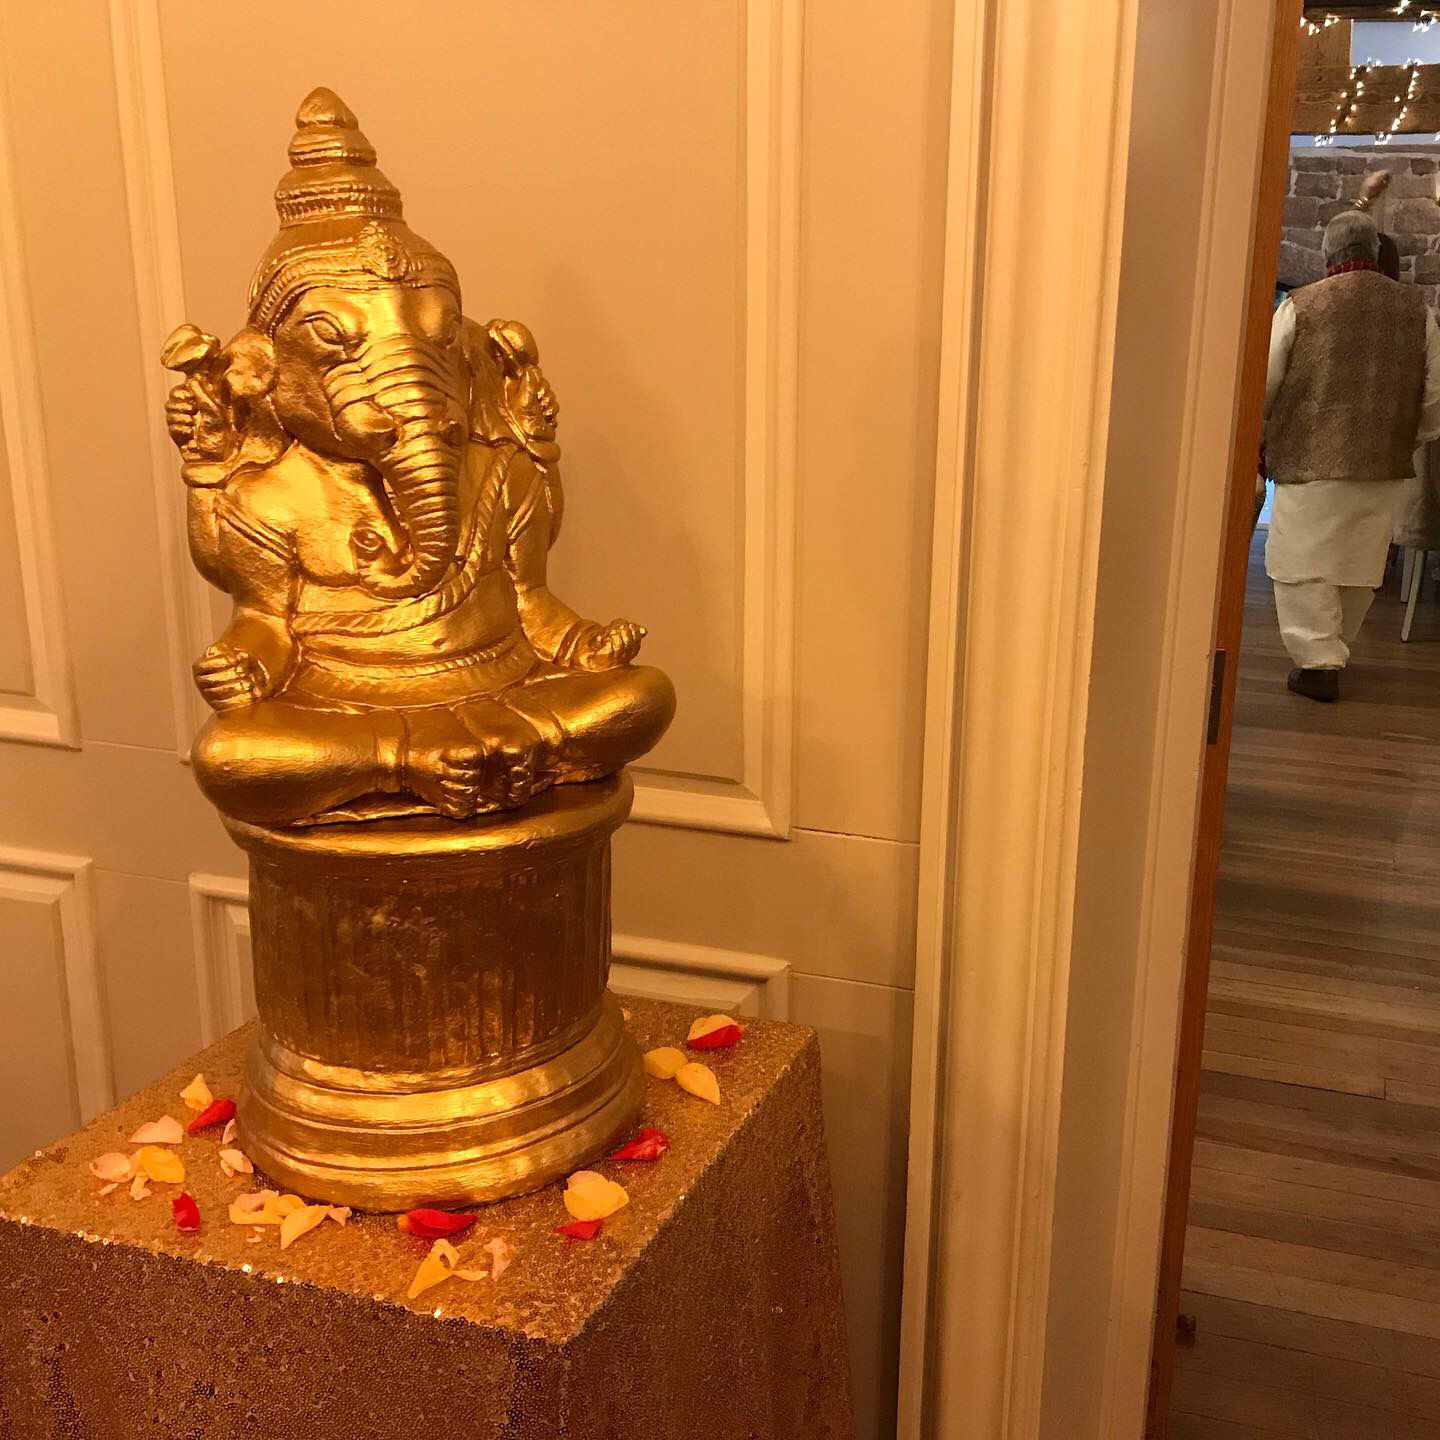 A golden statue of the hindu god Ganesha